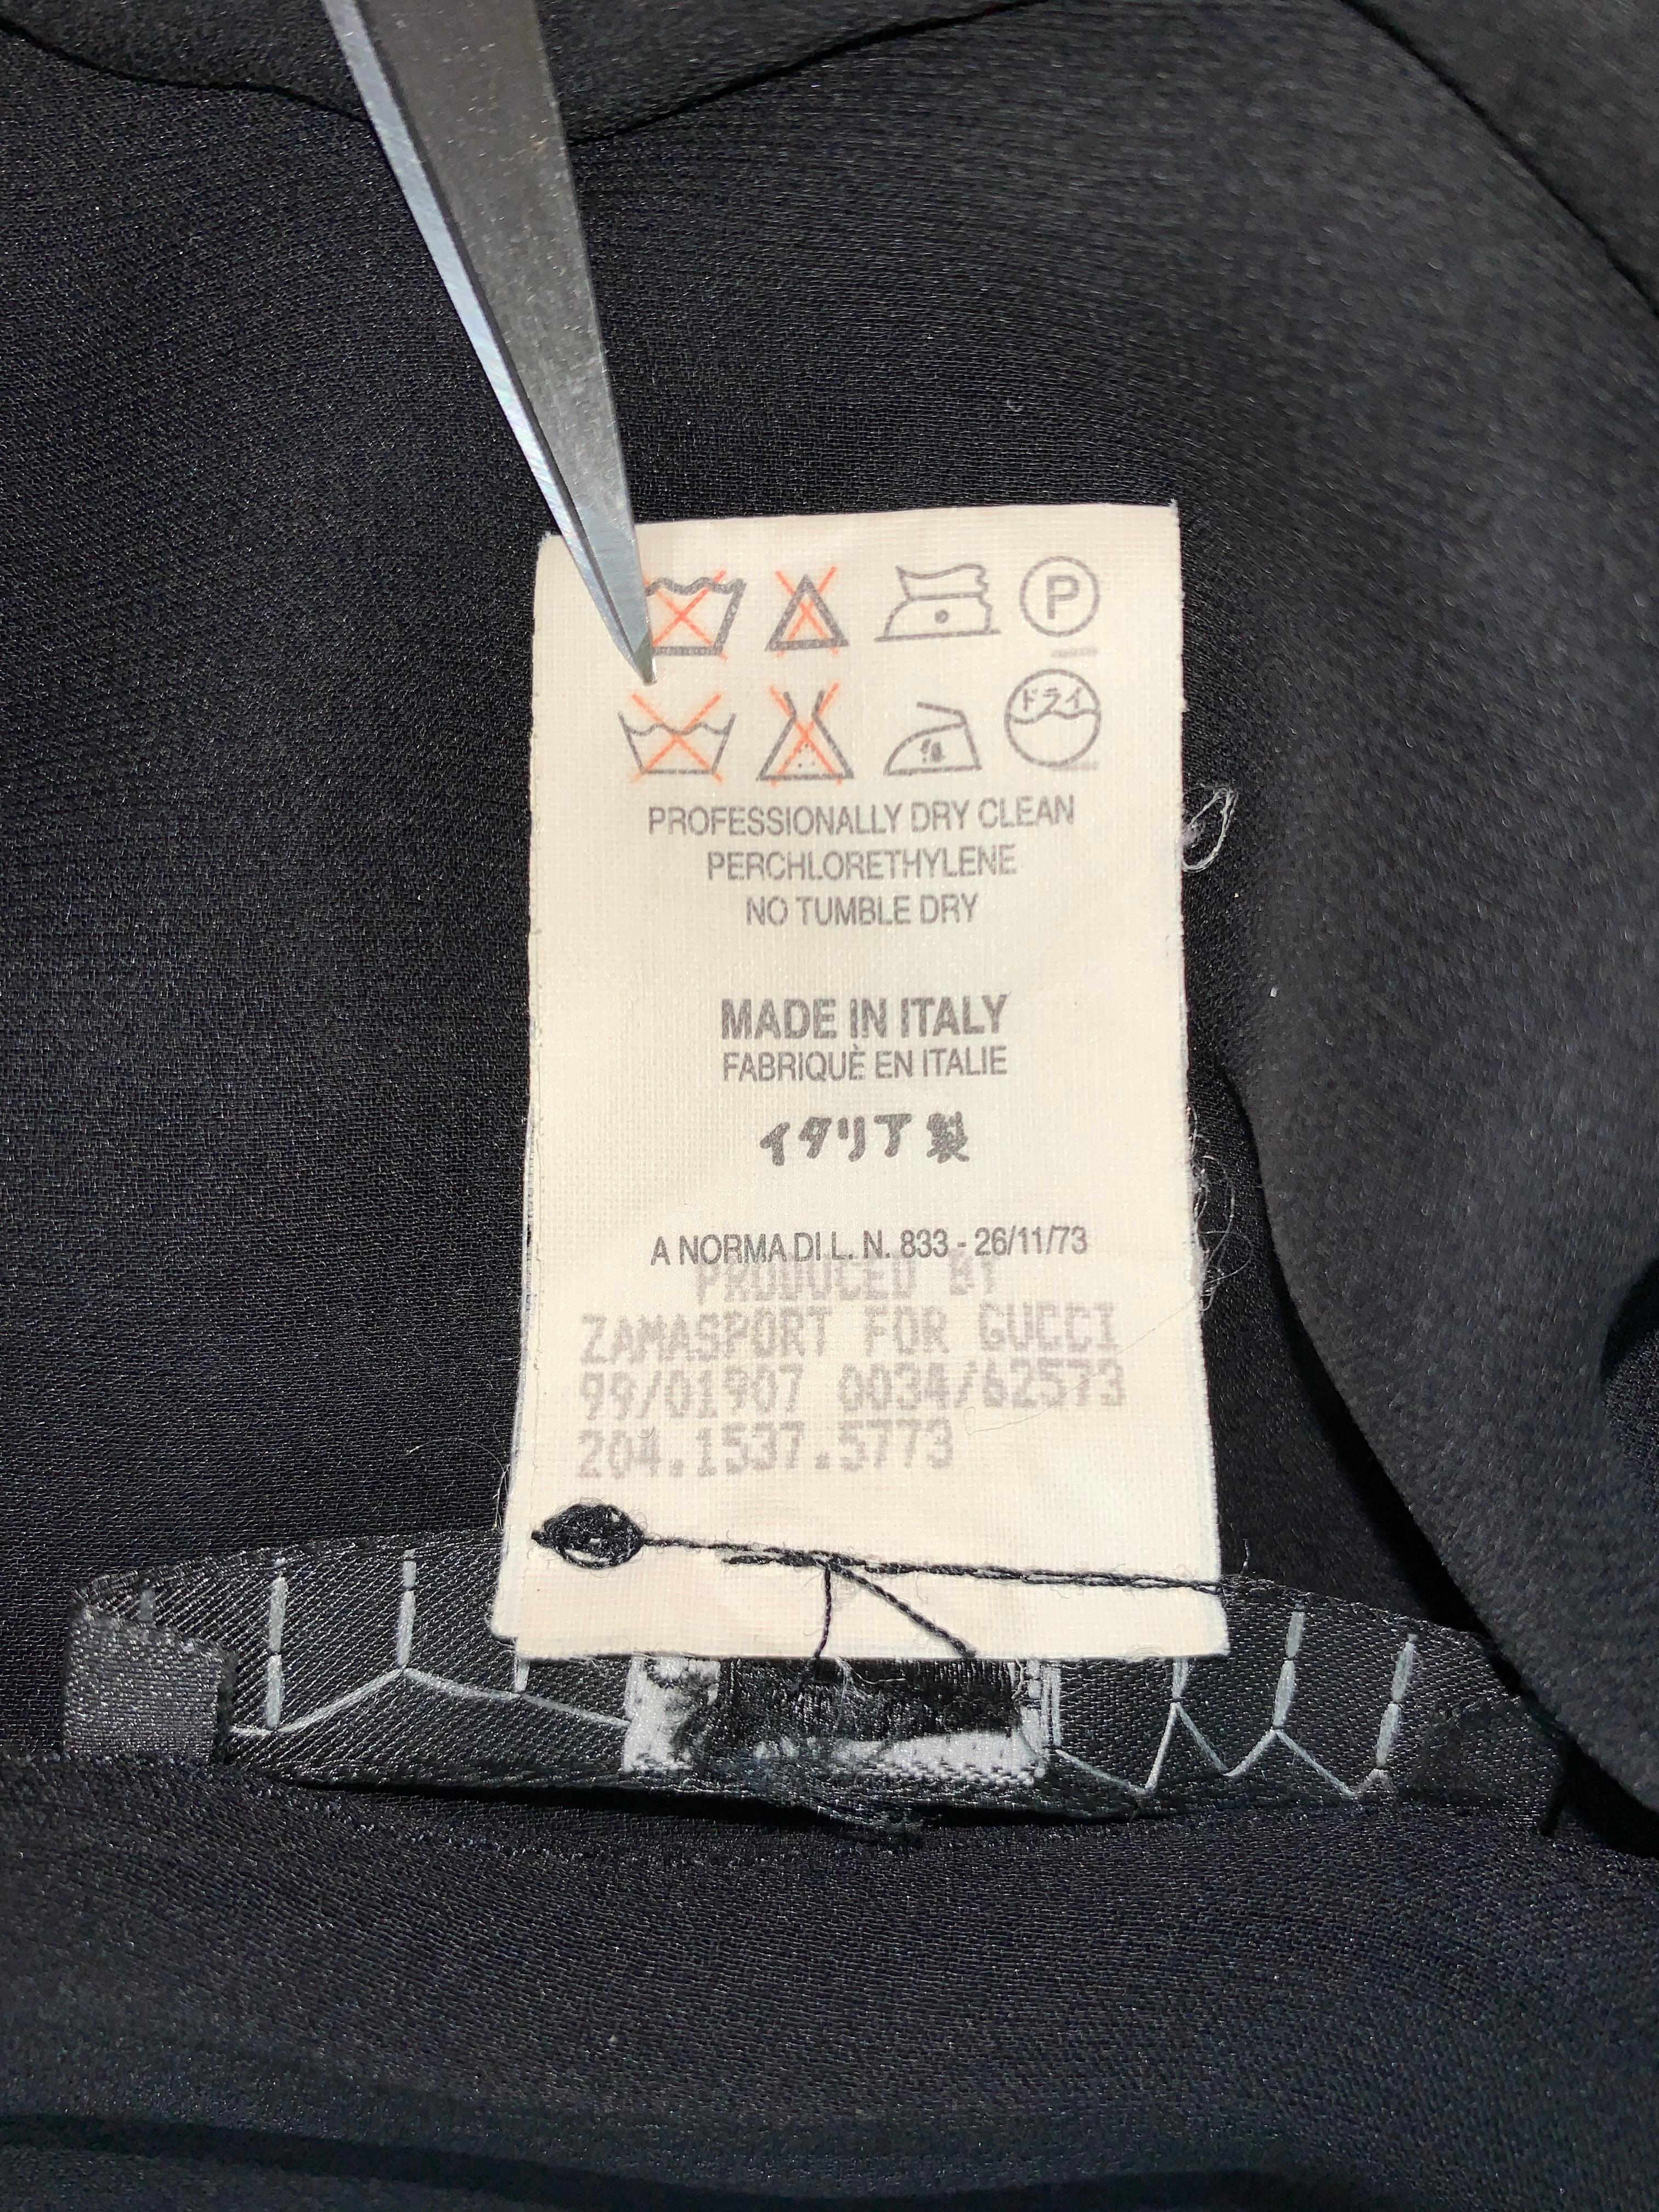 1999 Gucci by Tom Ford Semi-Sheer Black Plunging Embellished Slip Dress 1